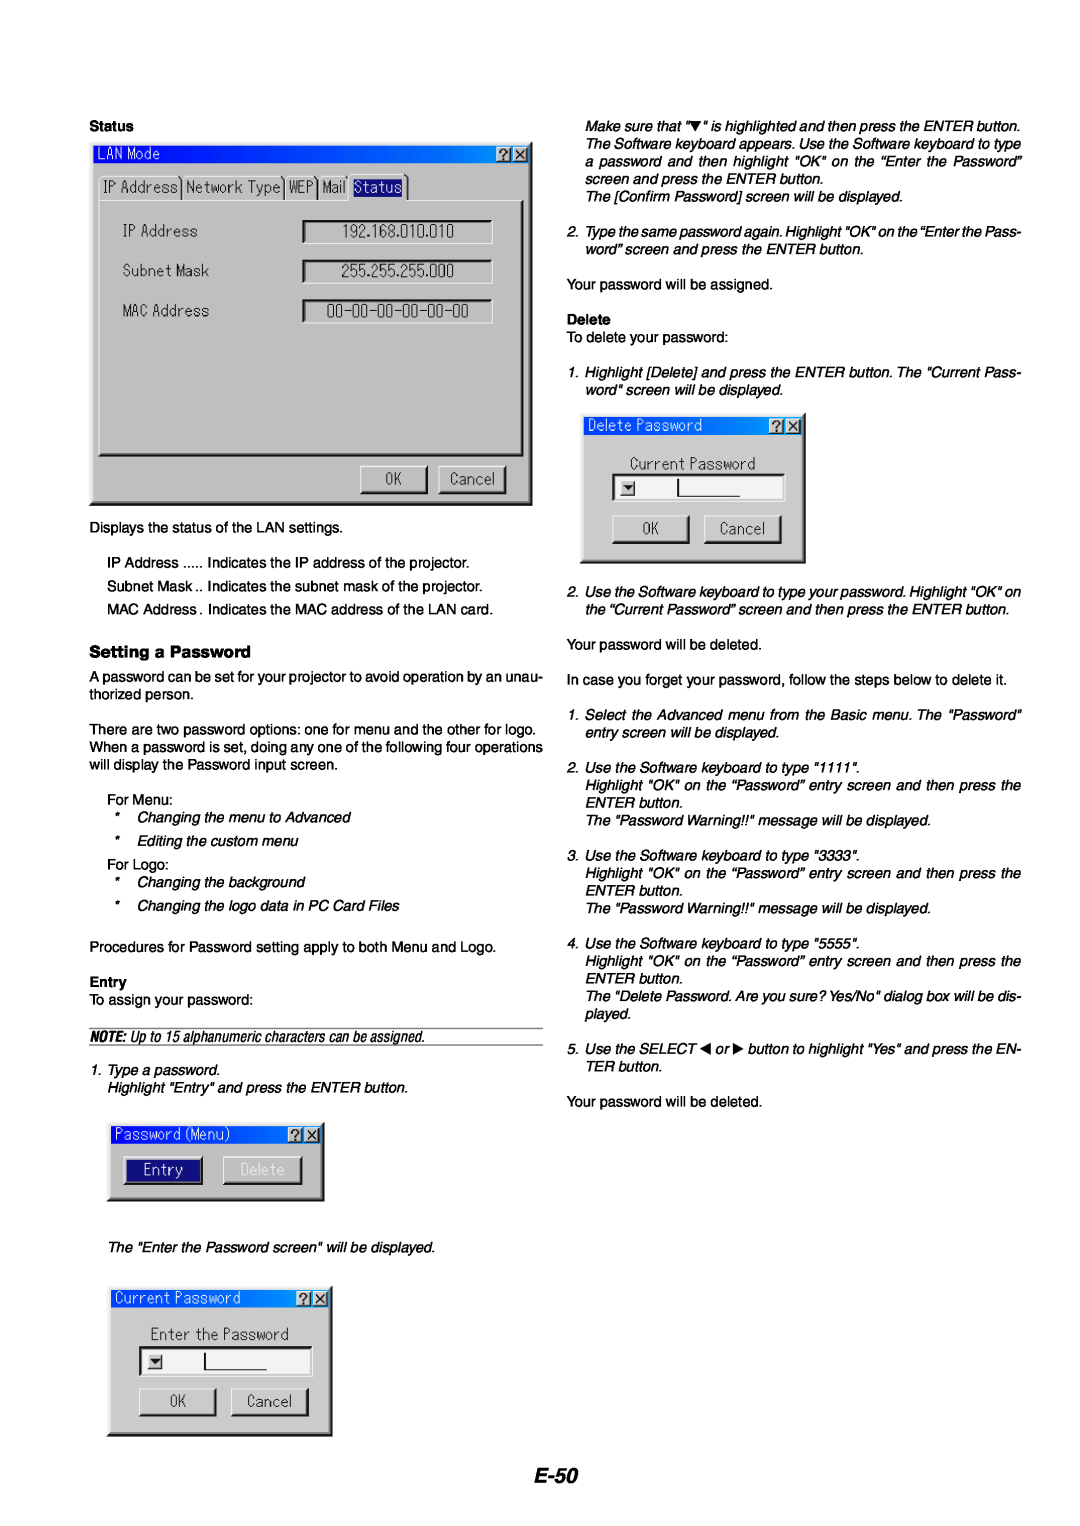 NEC MT1060 user manual E-50, Setting a Password 